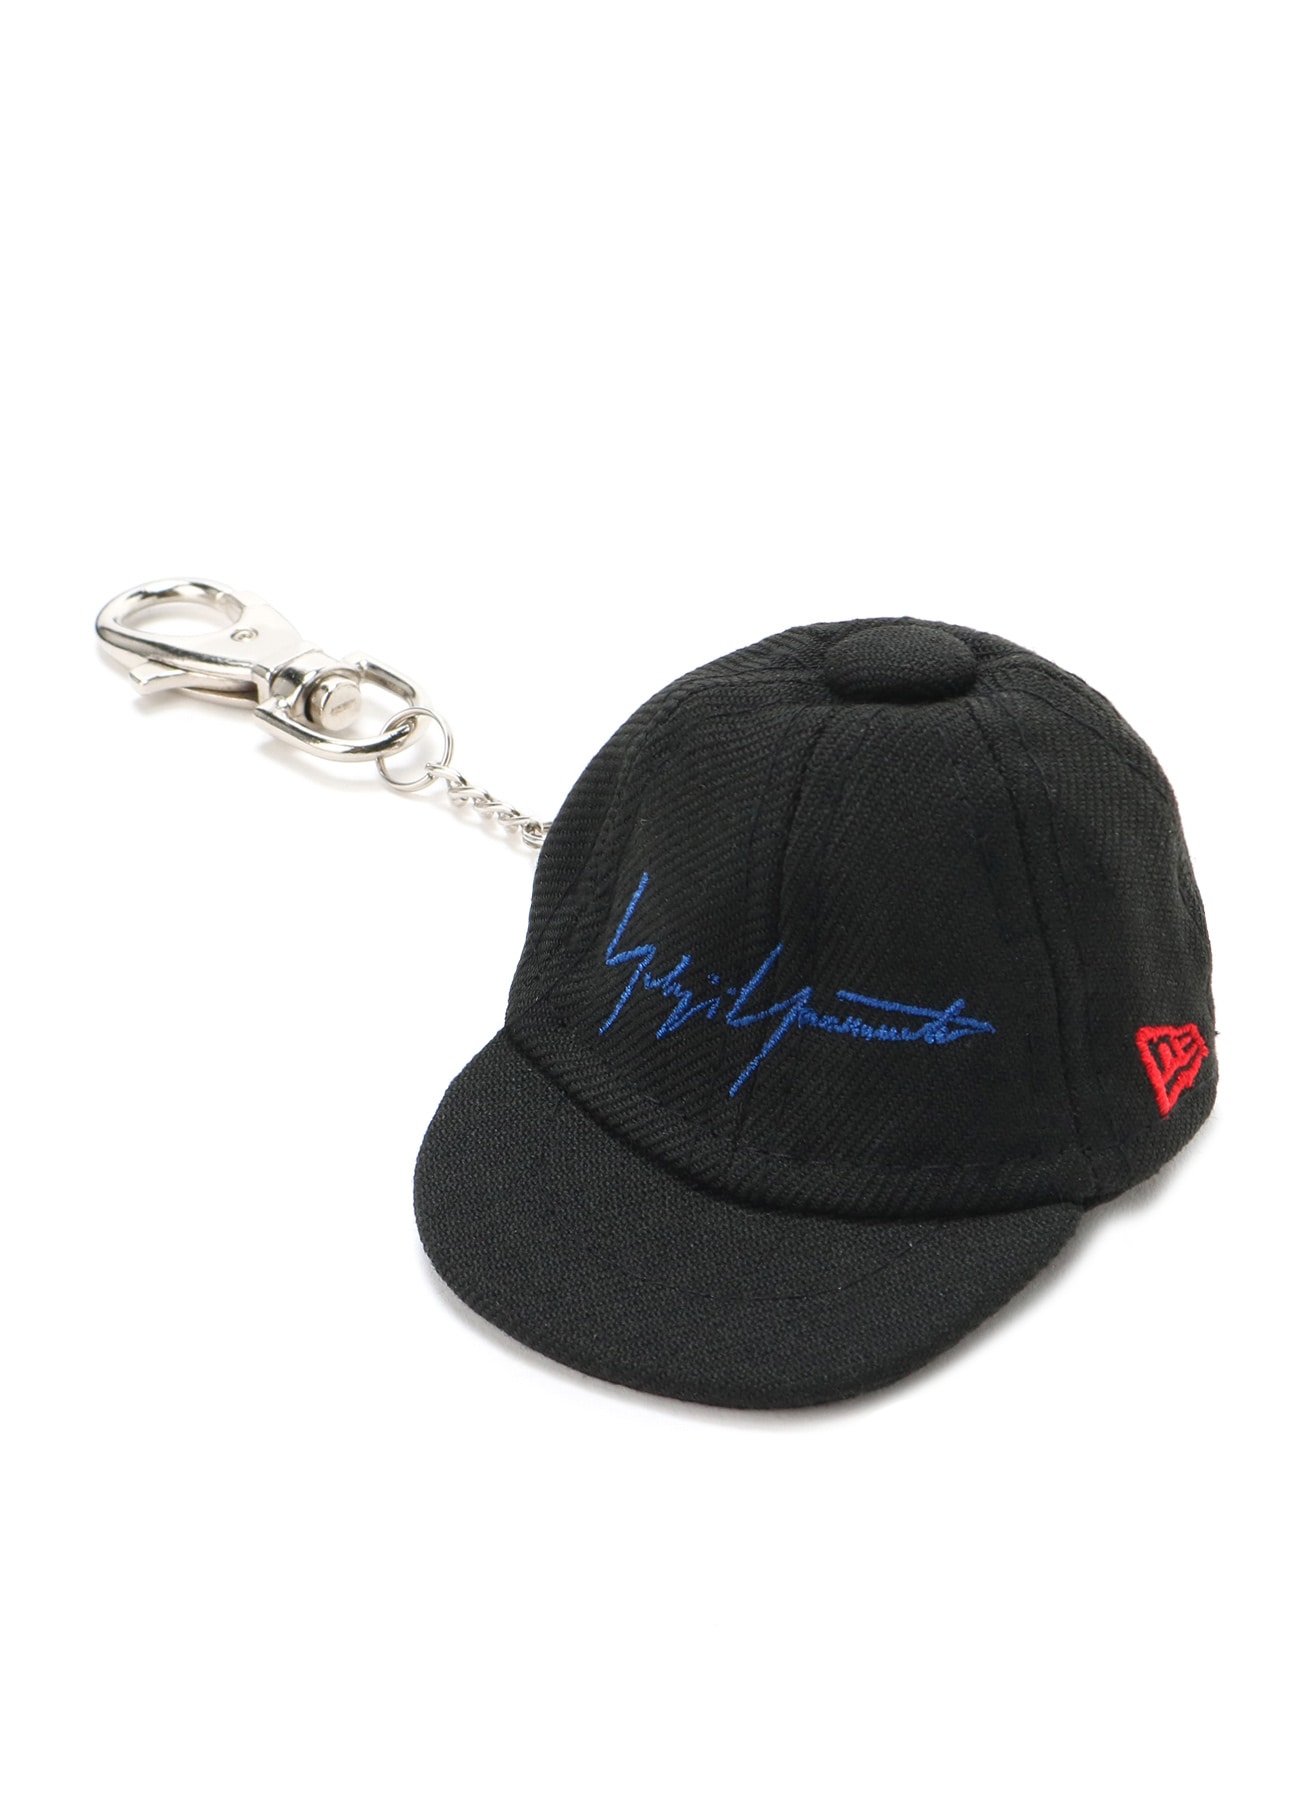 Yohji Yamamoto × New Era SIGNATURE CAP KEY HOLDER(FREE SIZE Black